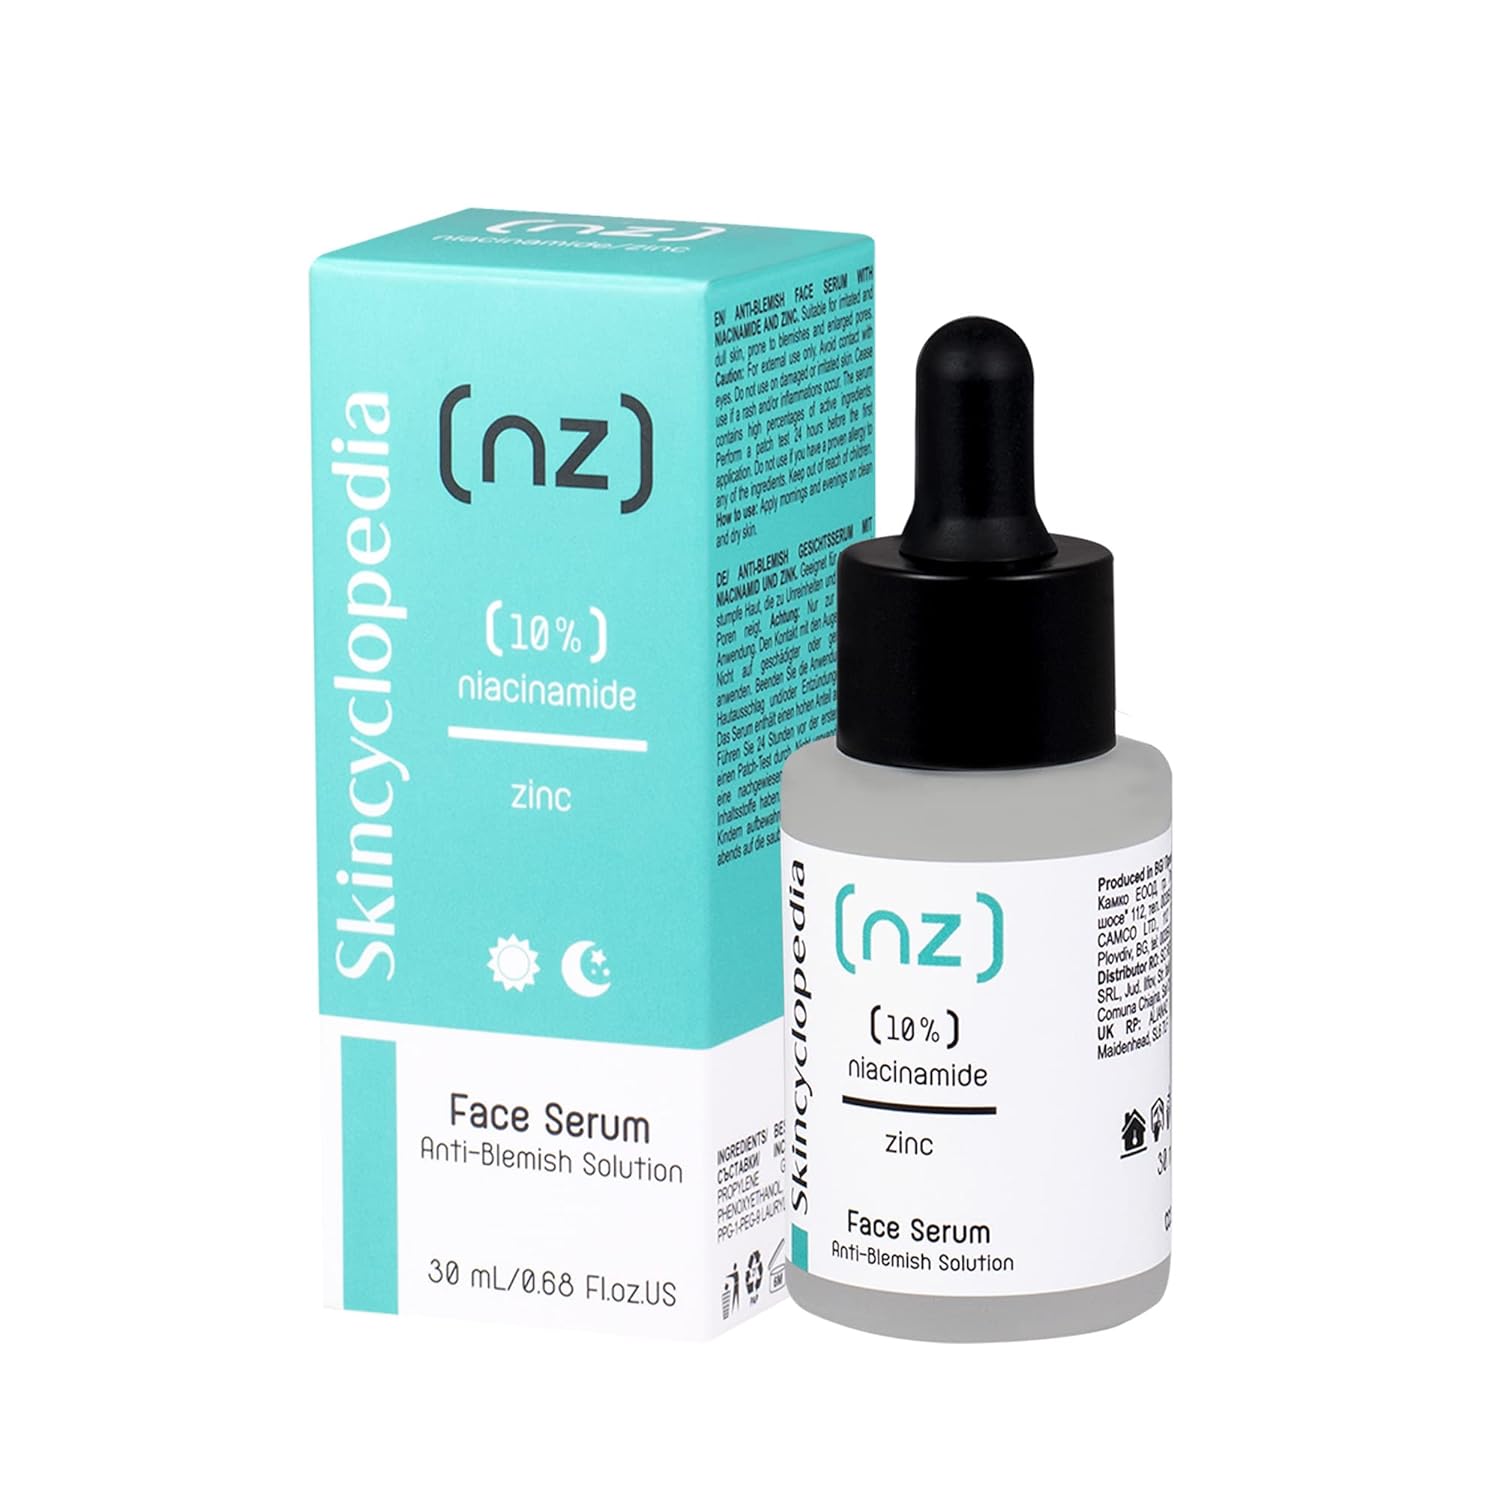 SKINCYCLOPEDIA Face Serum 10% Niacinamide + 1% Zinc